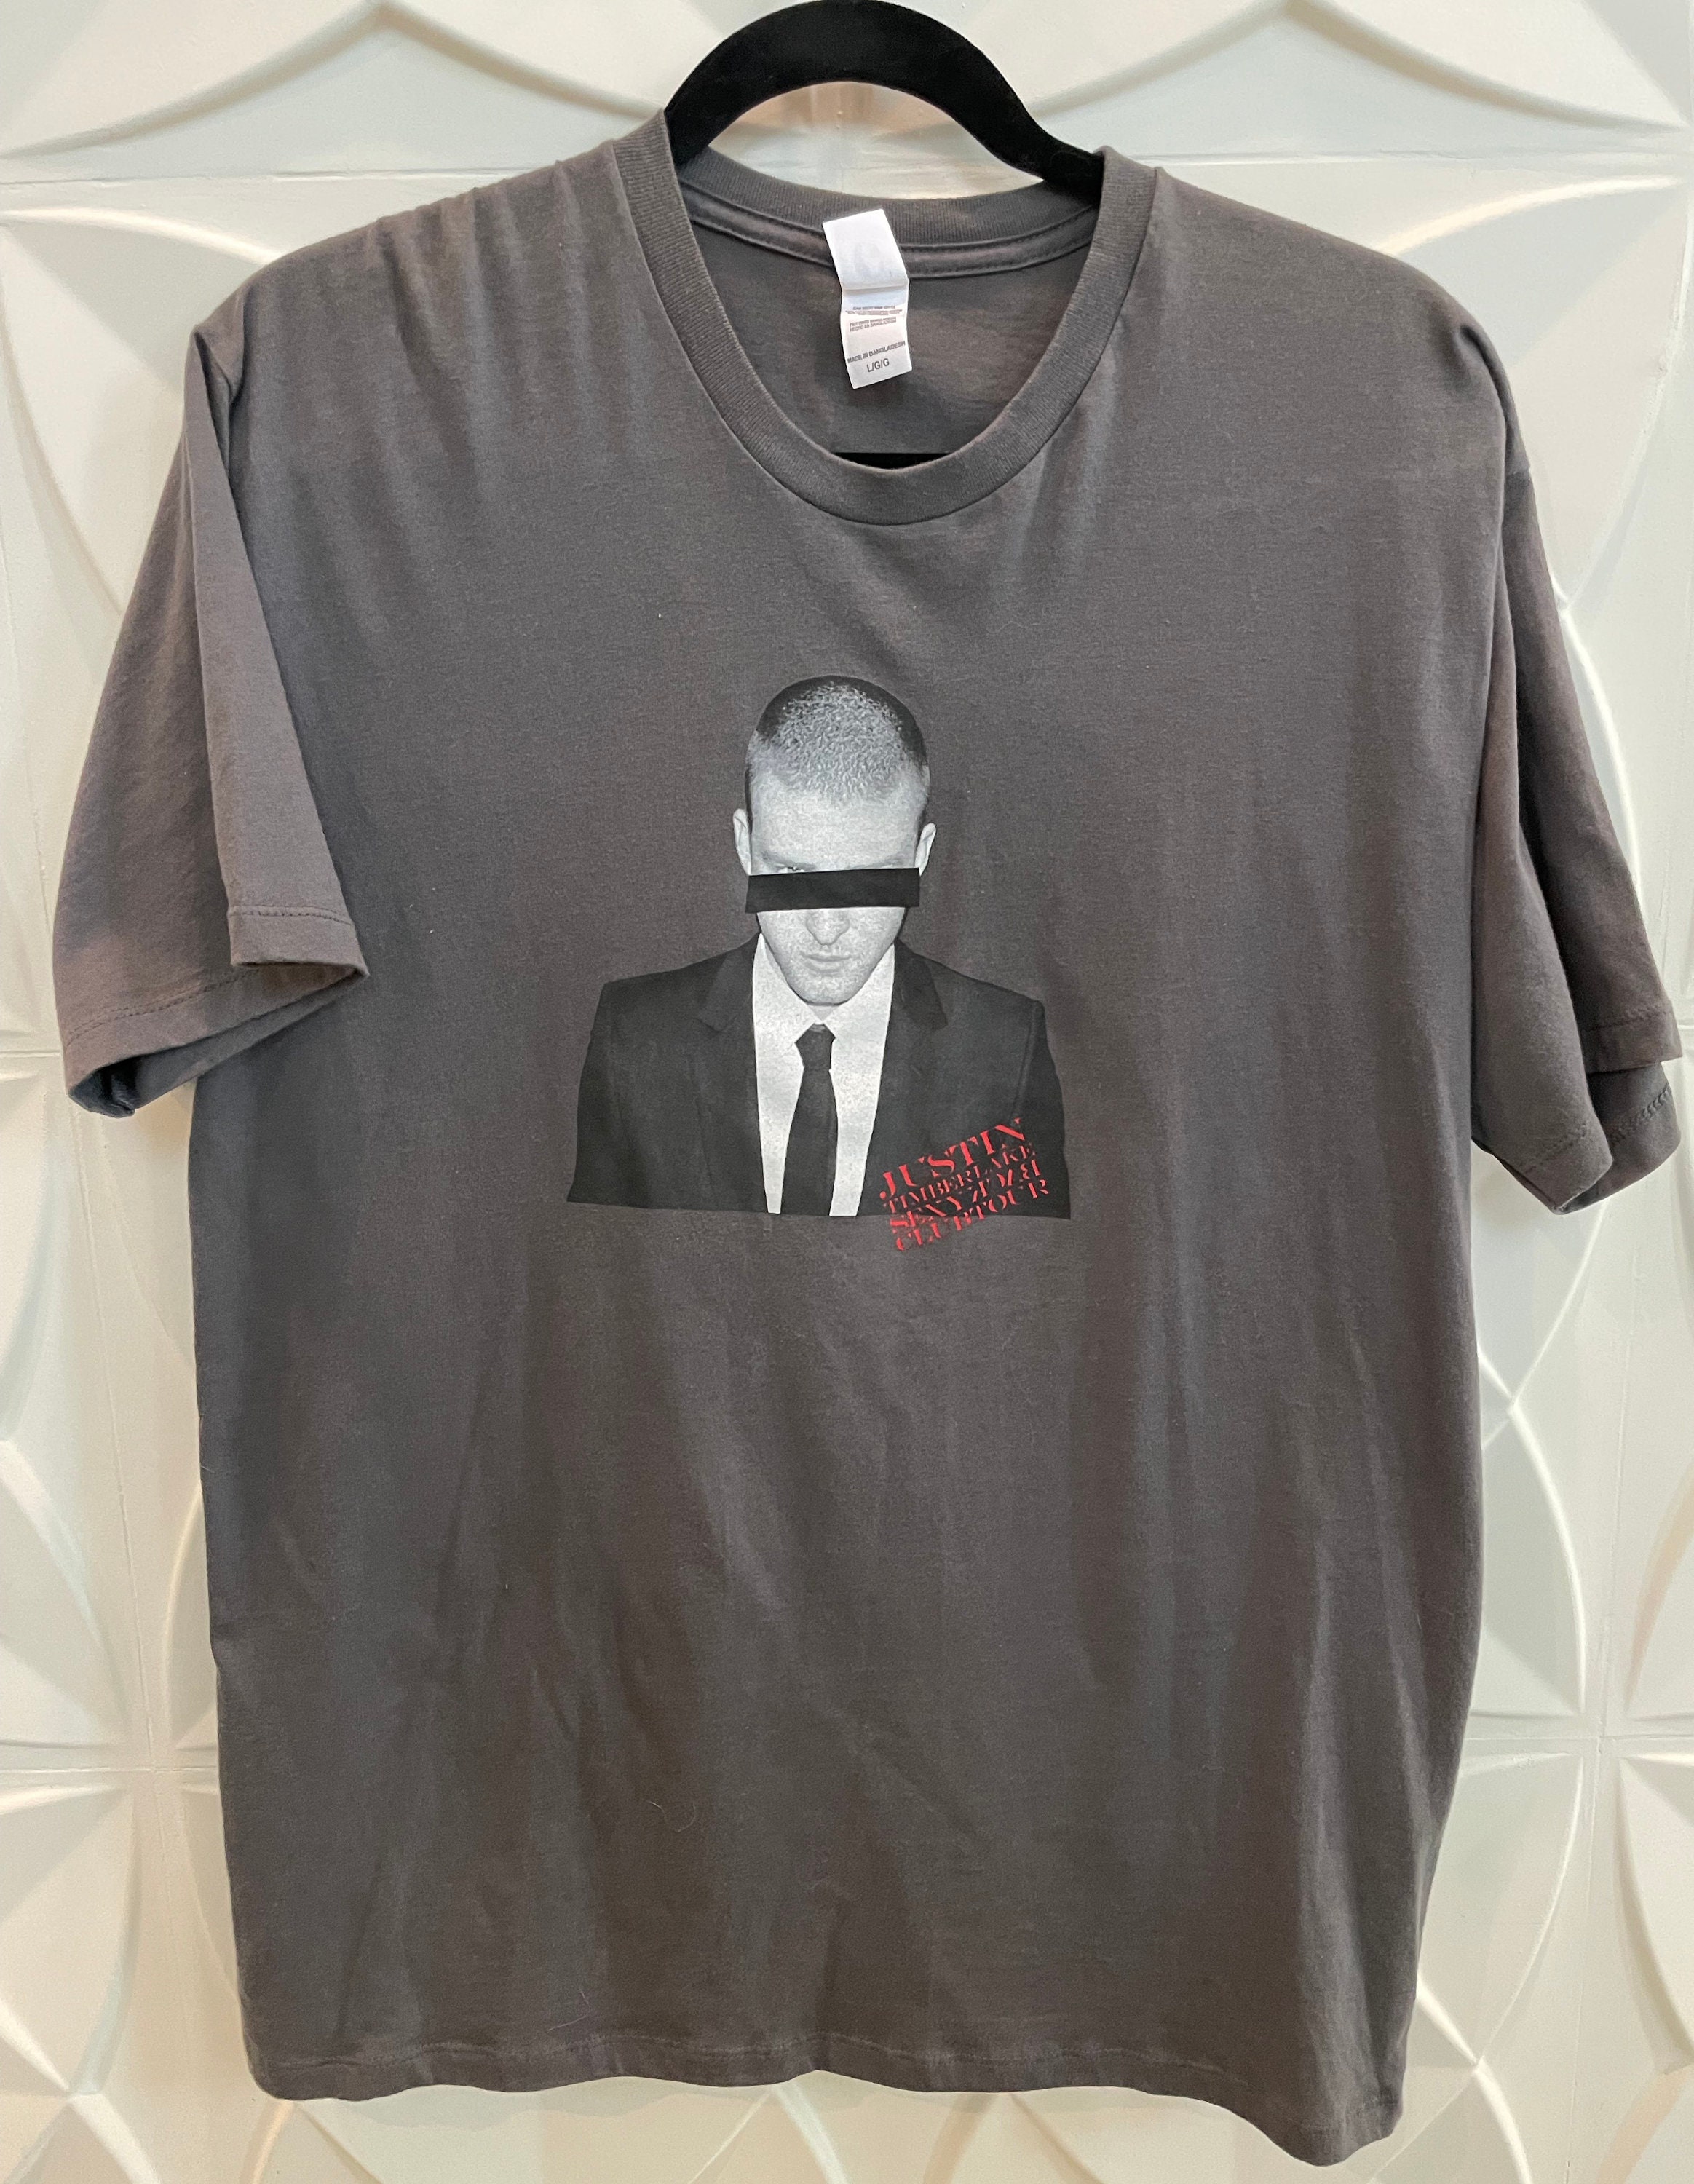 Discover Vintage Justin Timberlake SexyBack t-shirt, sz L